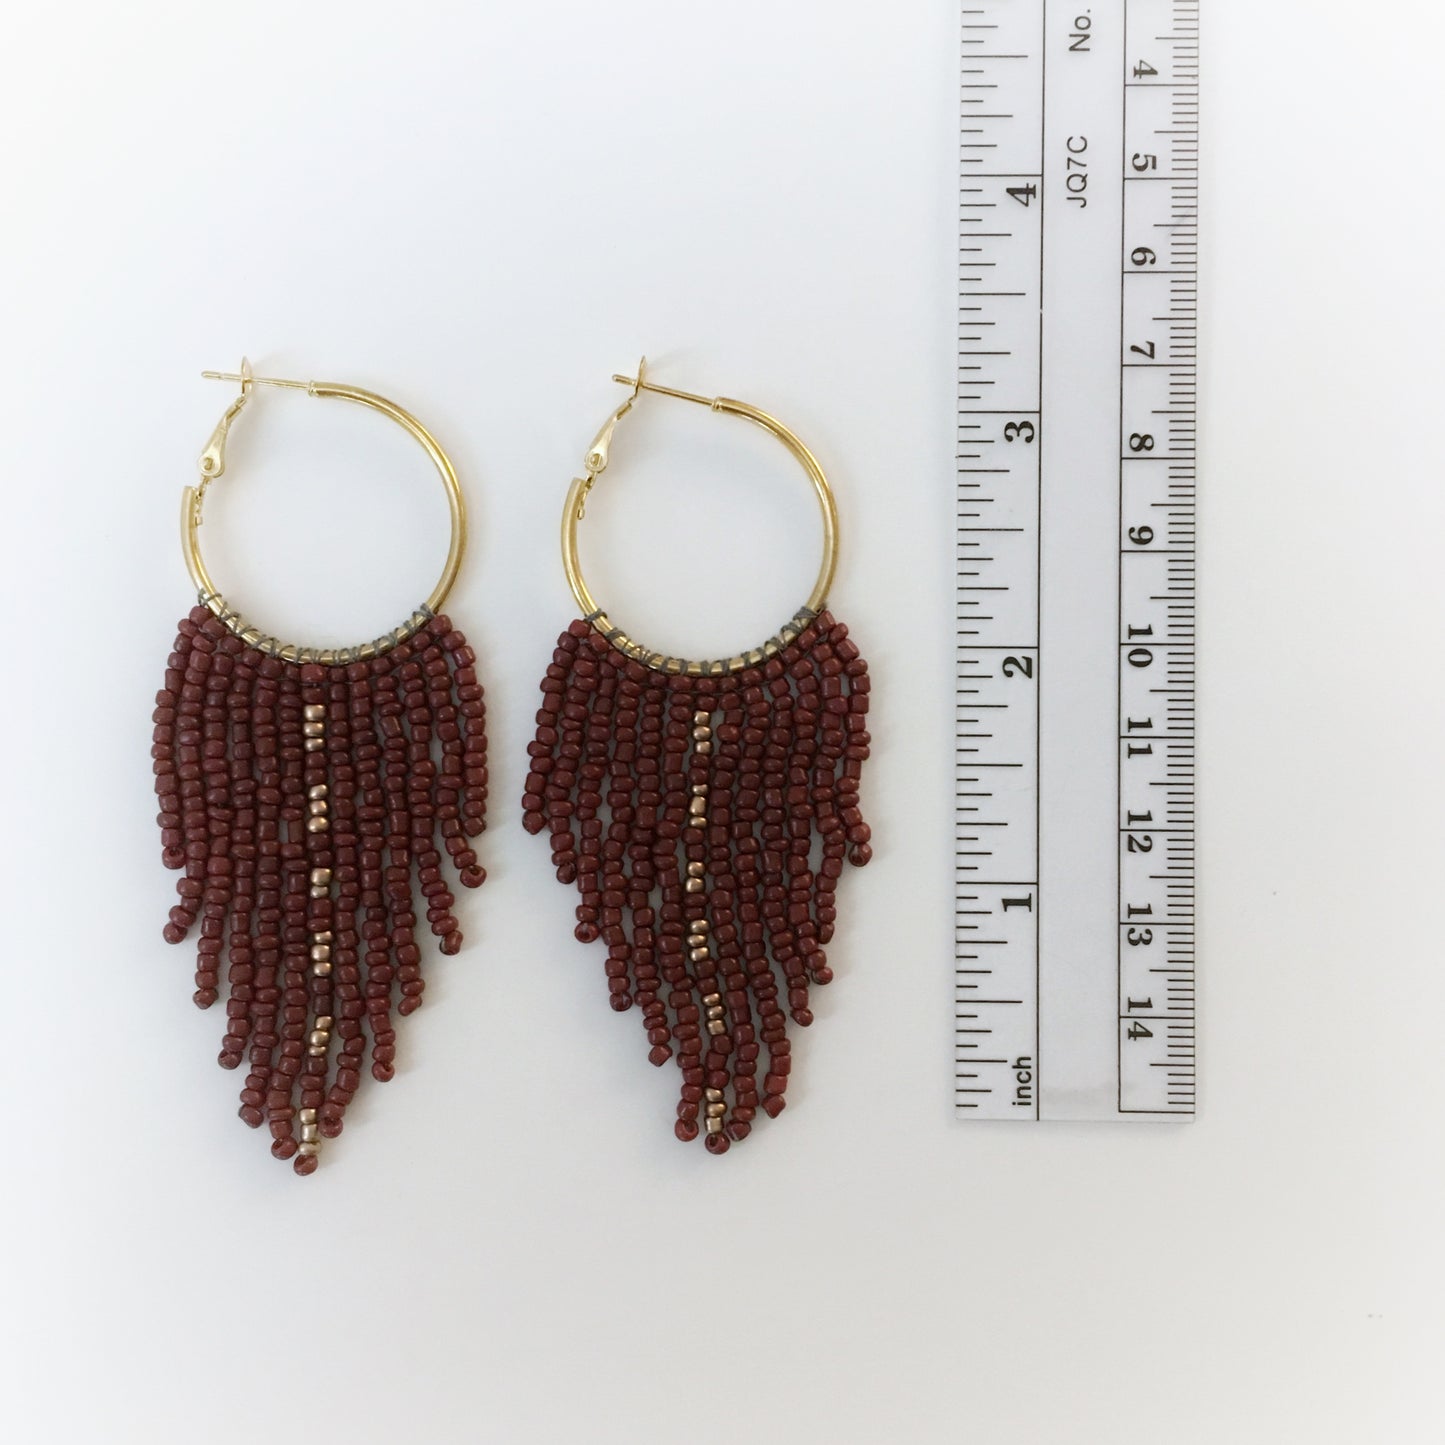 Hand-Woven Burgundy and Gold Fringe Earrings